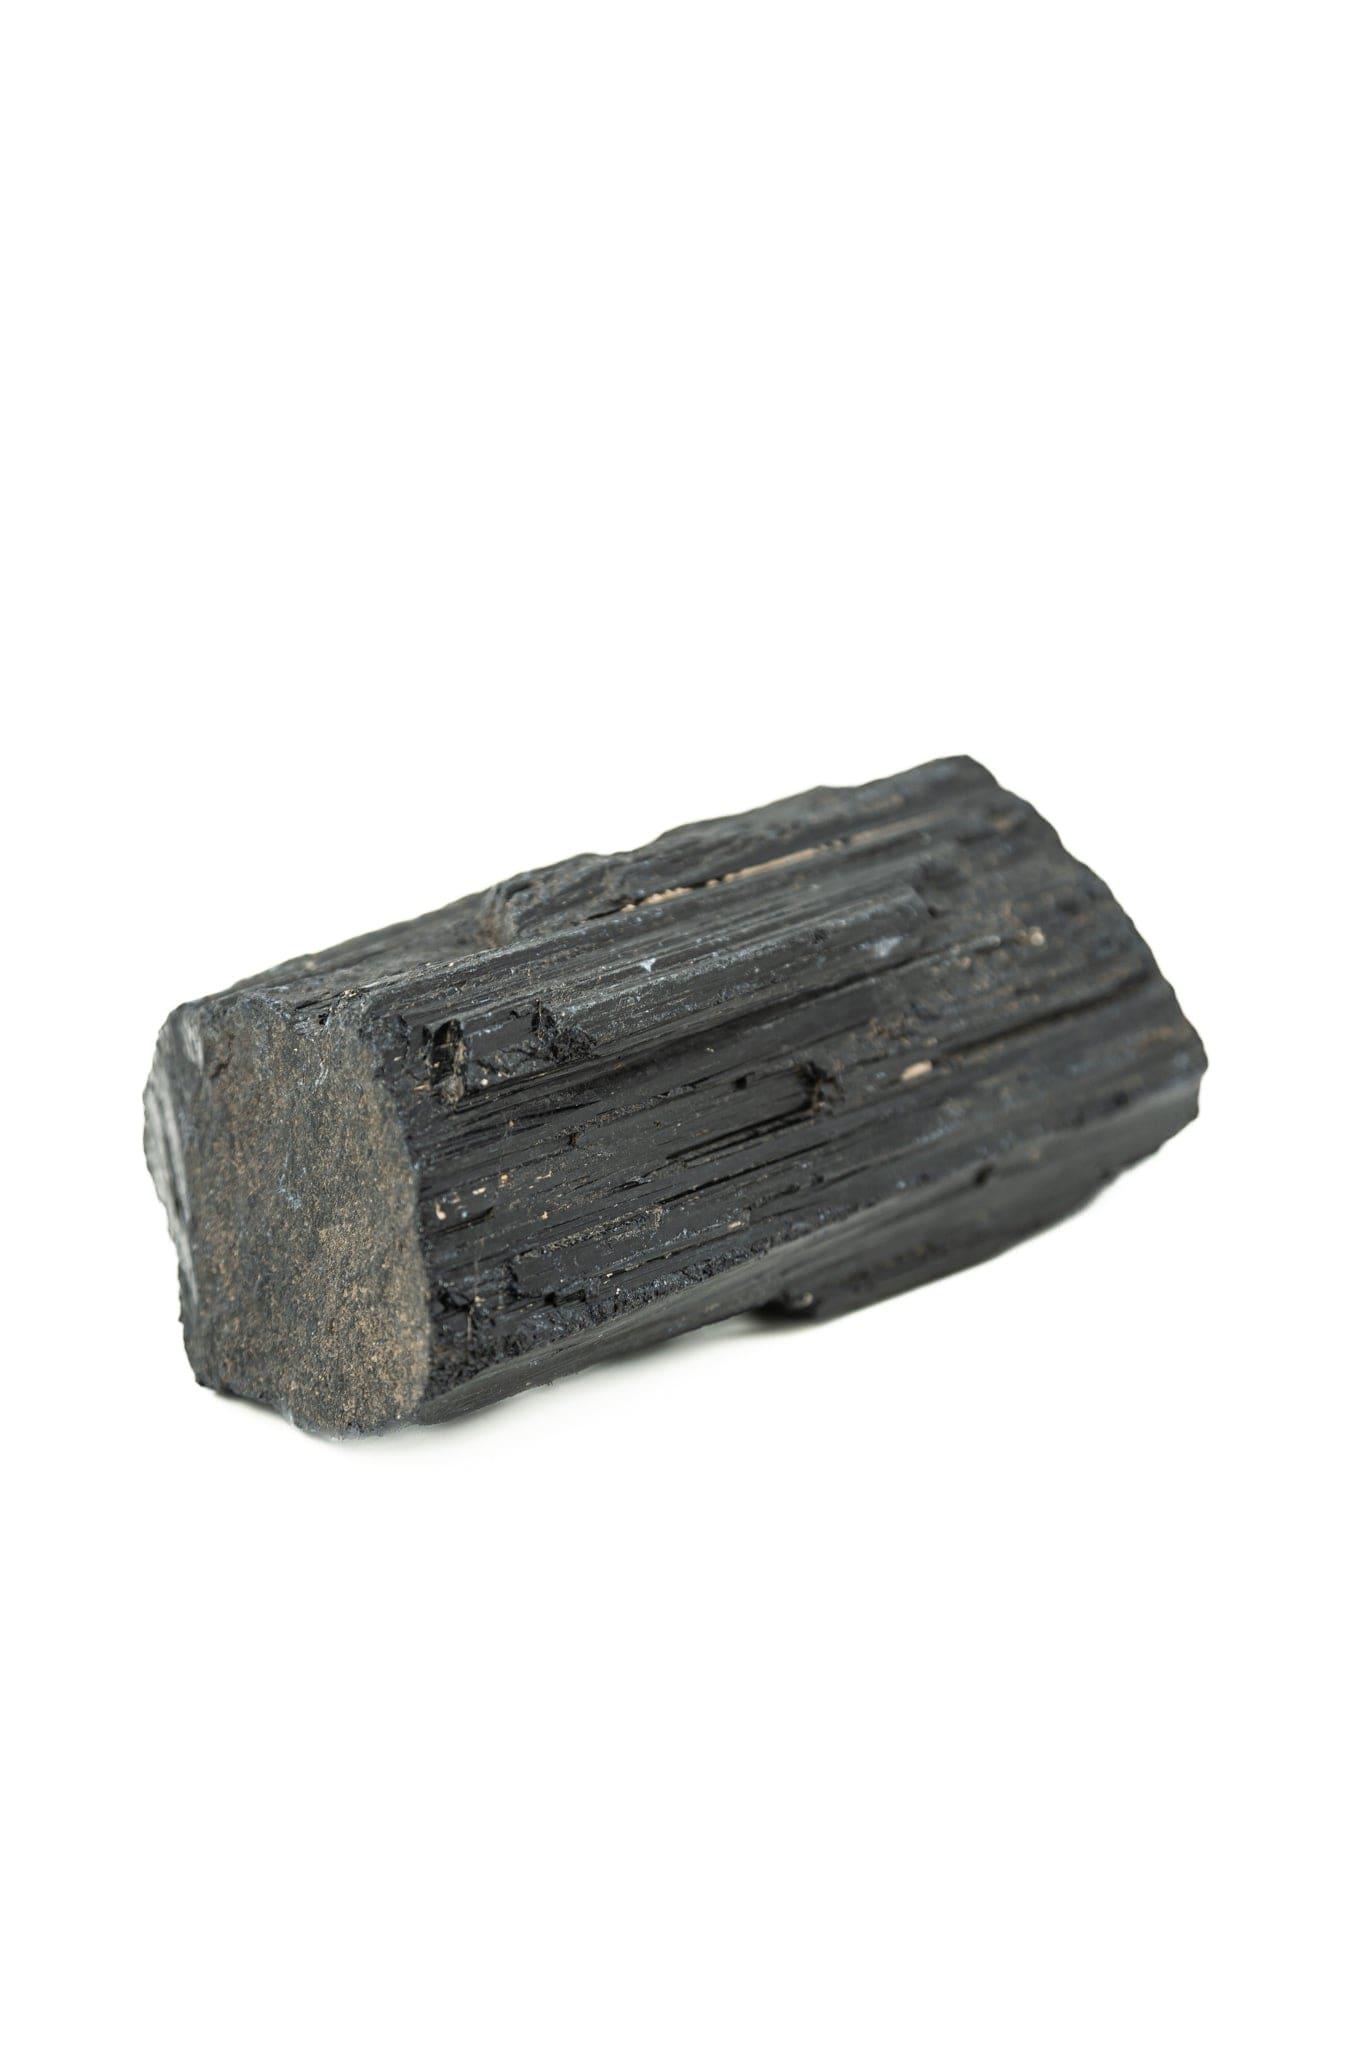 Black Tourmaline Logs Black Tourmaline